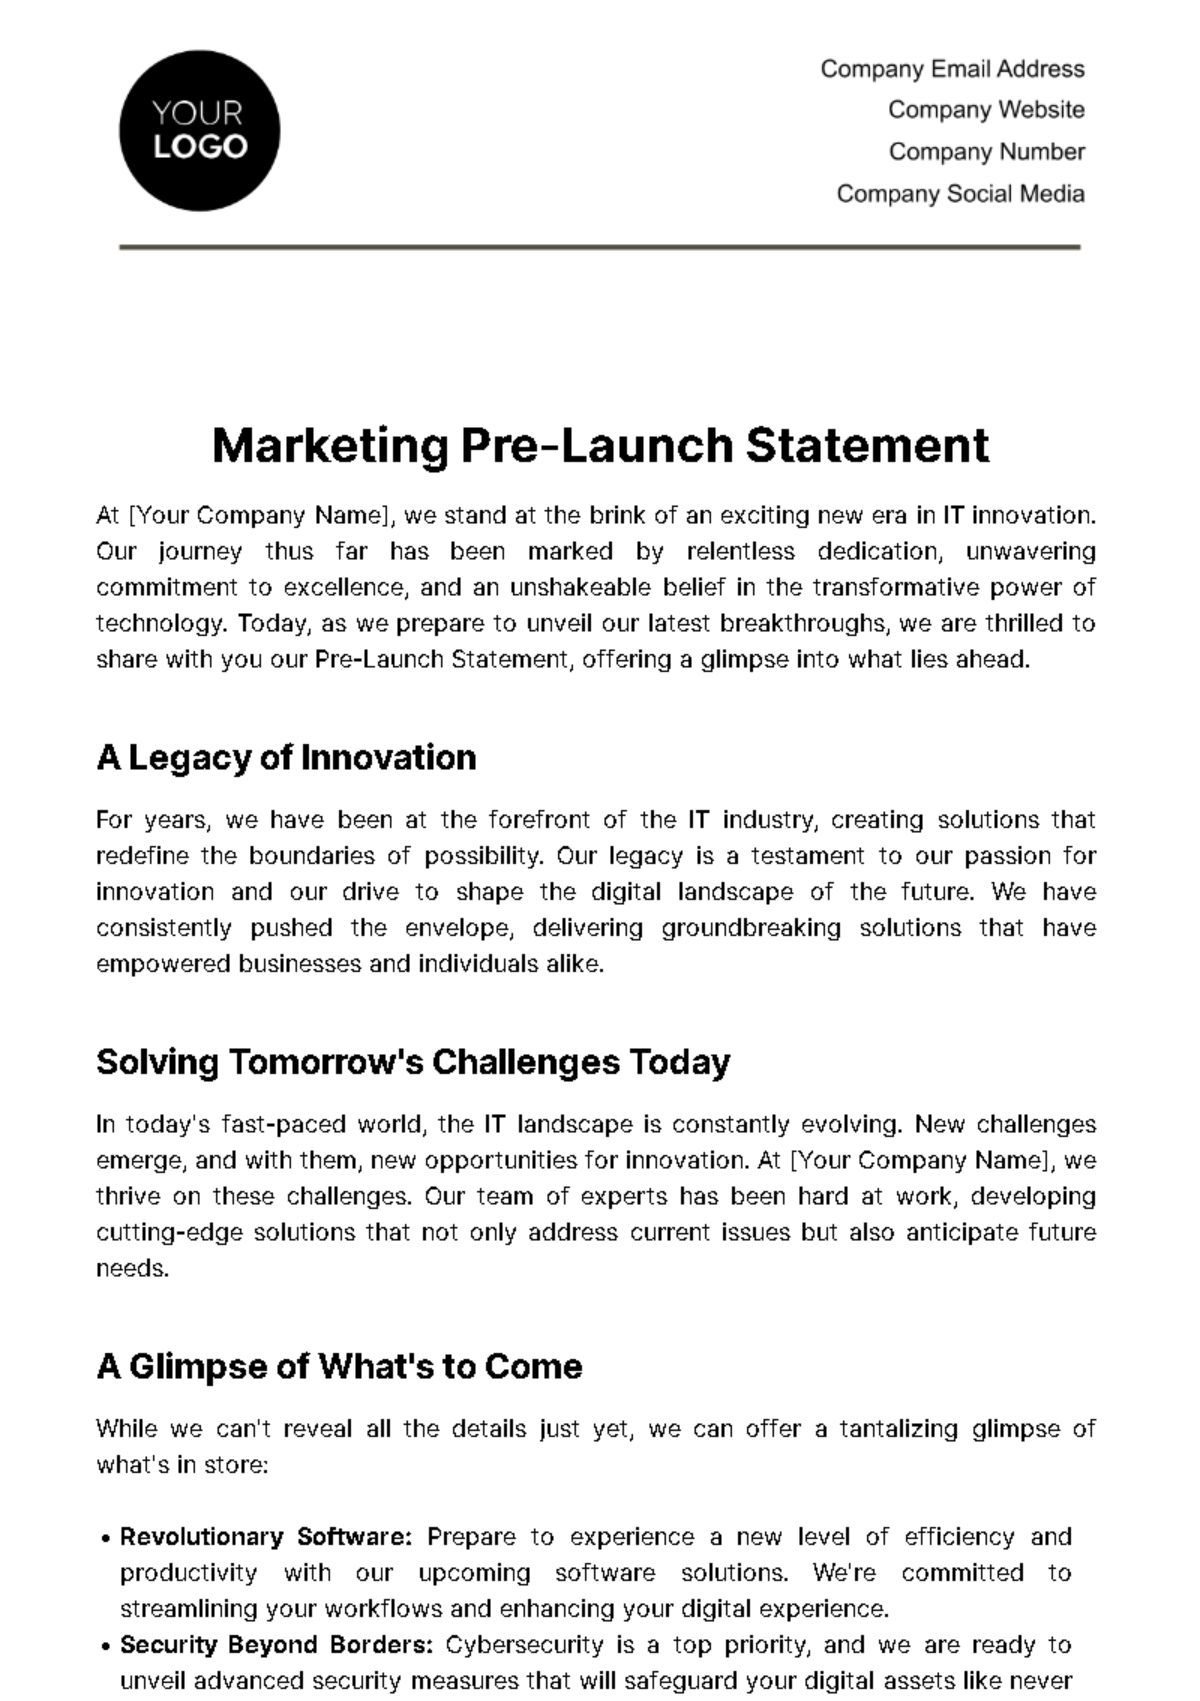  Marketing Pre-Launch Statement Template